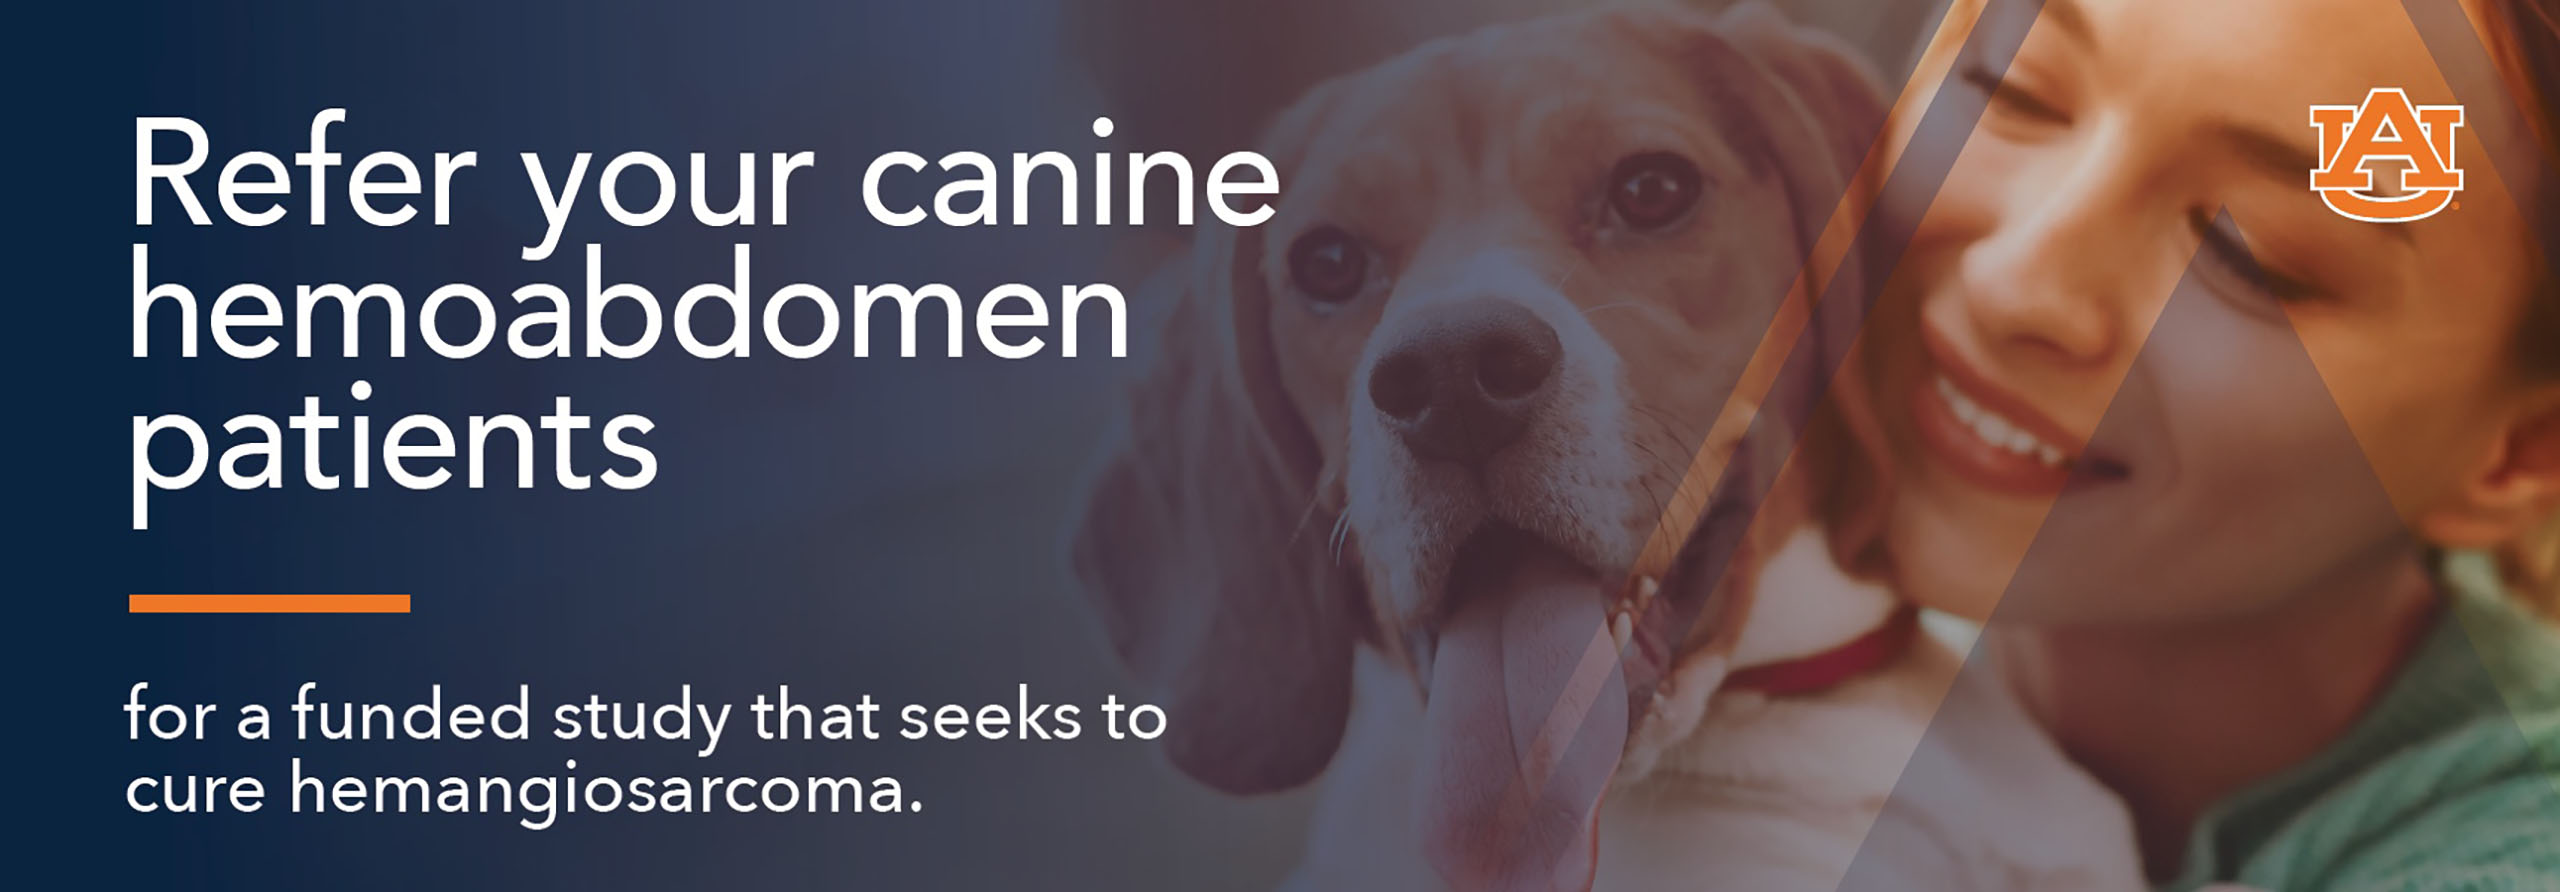 Refer your canine hemoabdomen patients